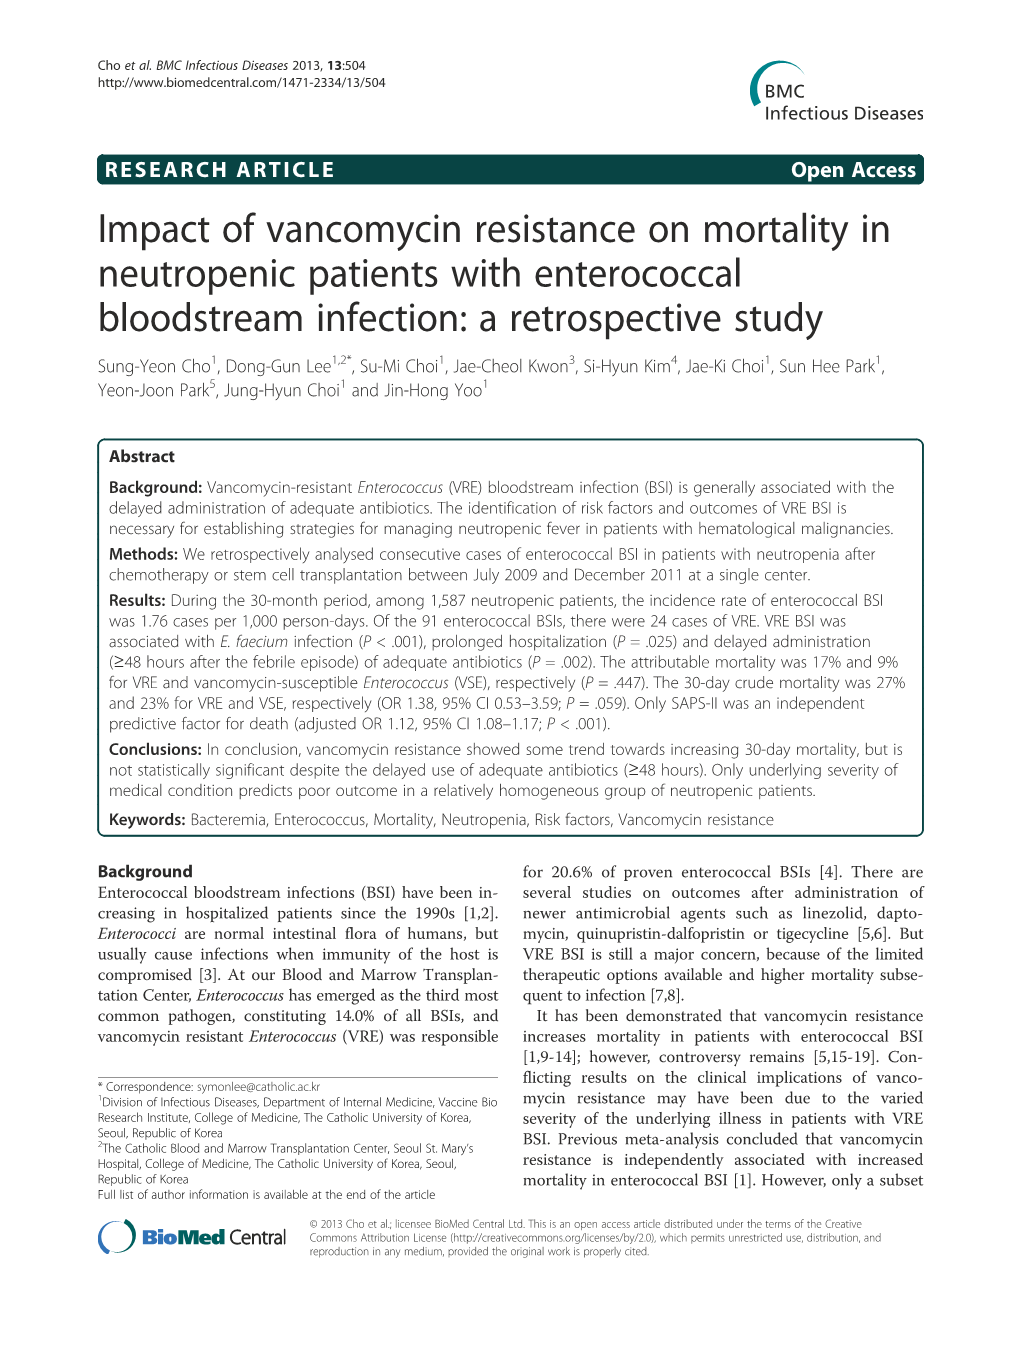 Impact of Vancomycin Resistance on Mortality in Neutropenic Patients